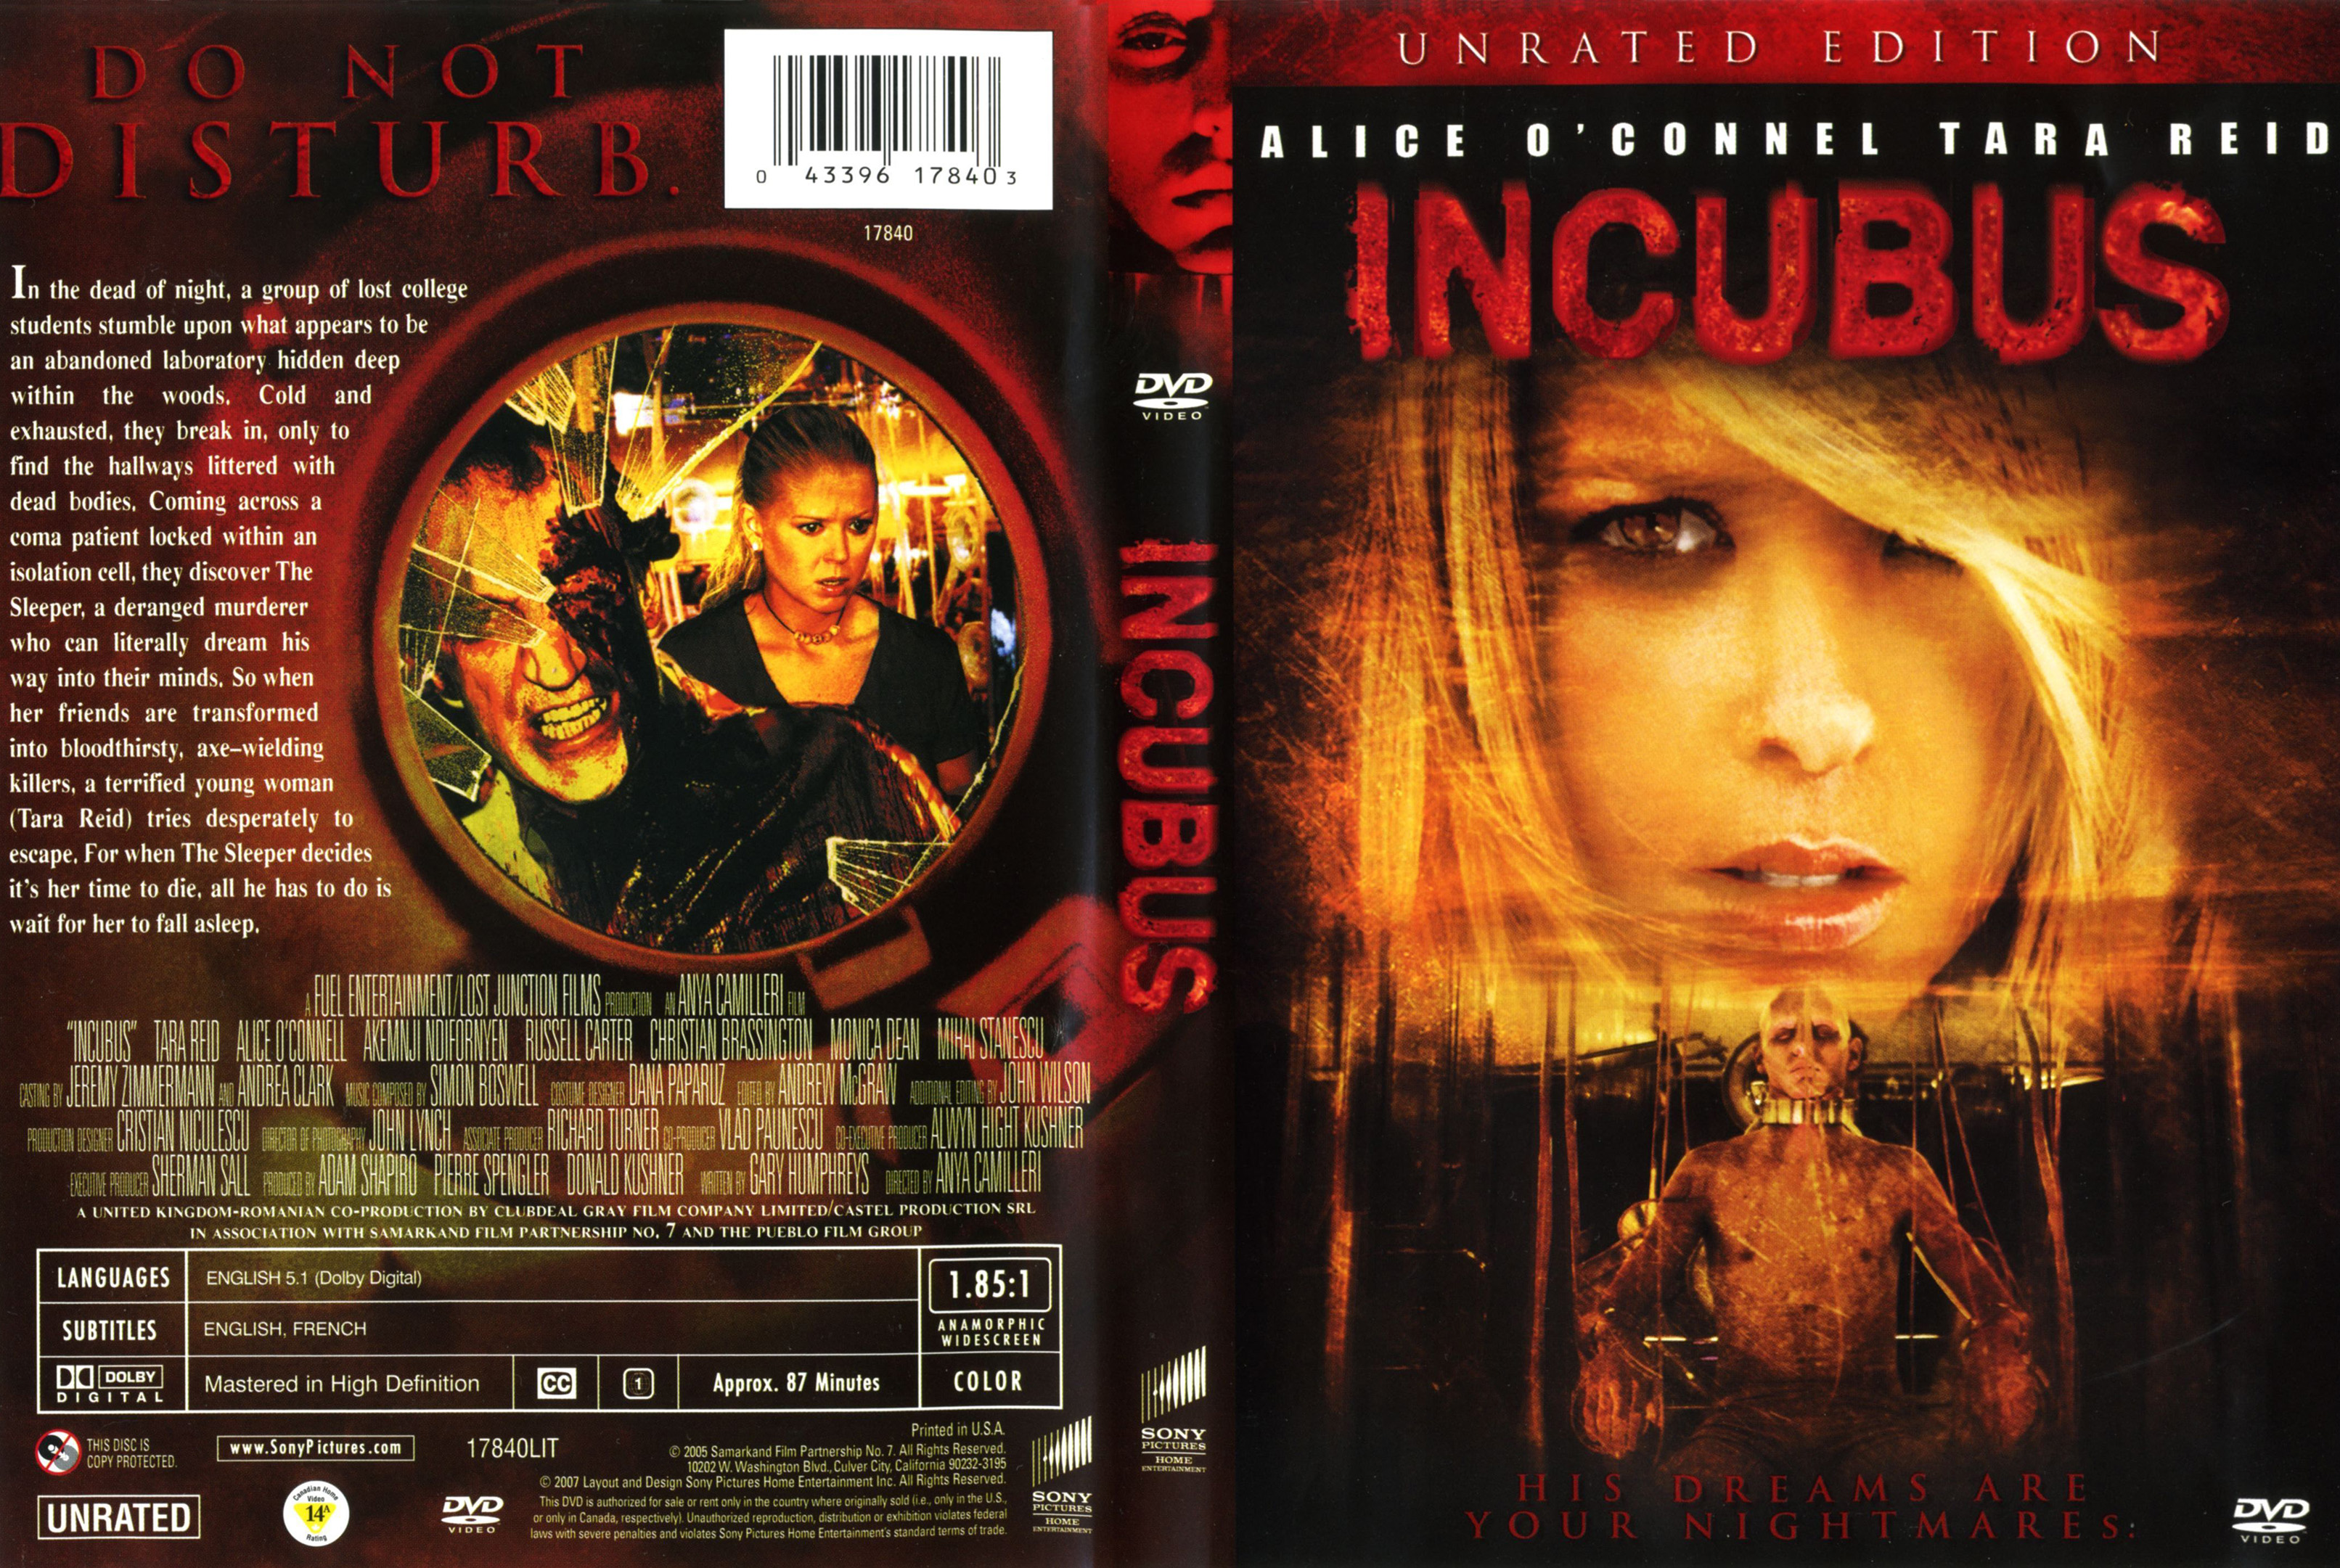 Jaquette DVD Incubus (2005)